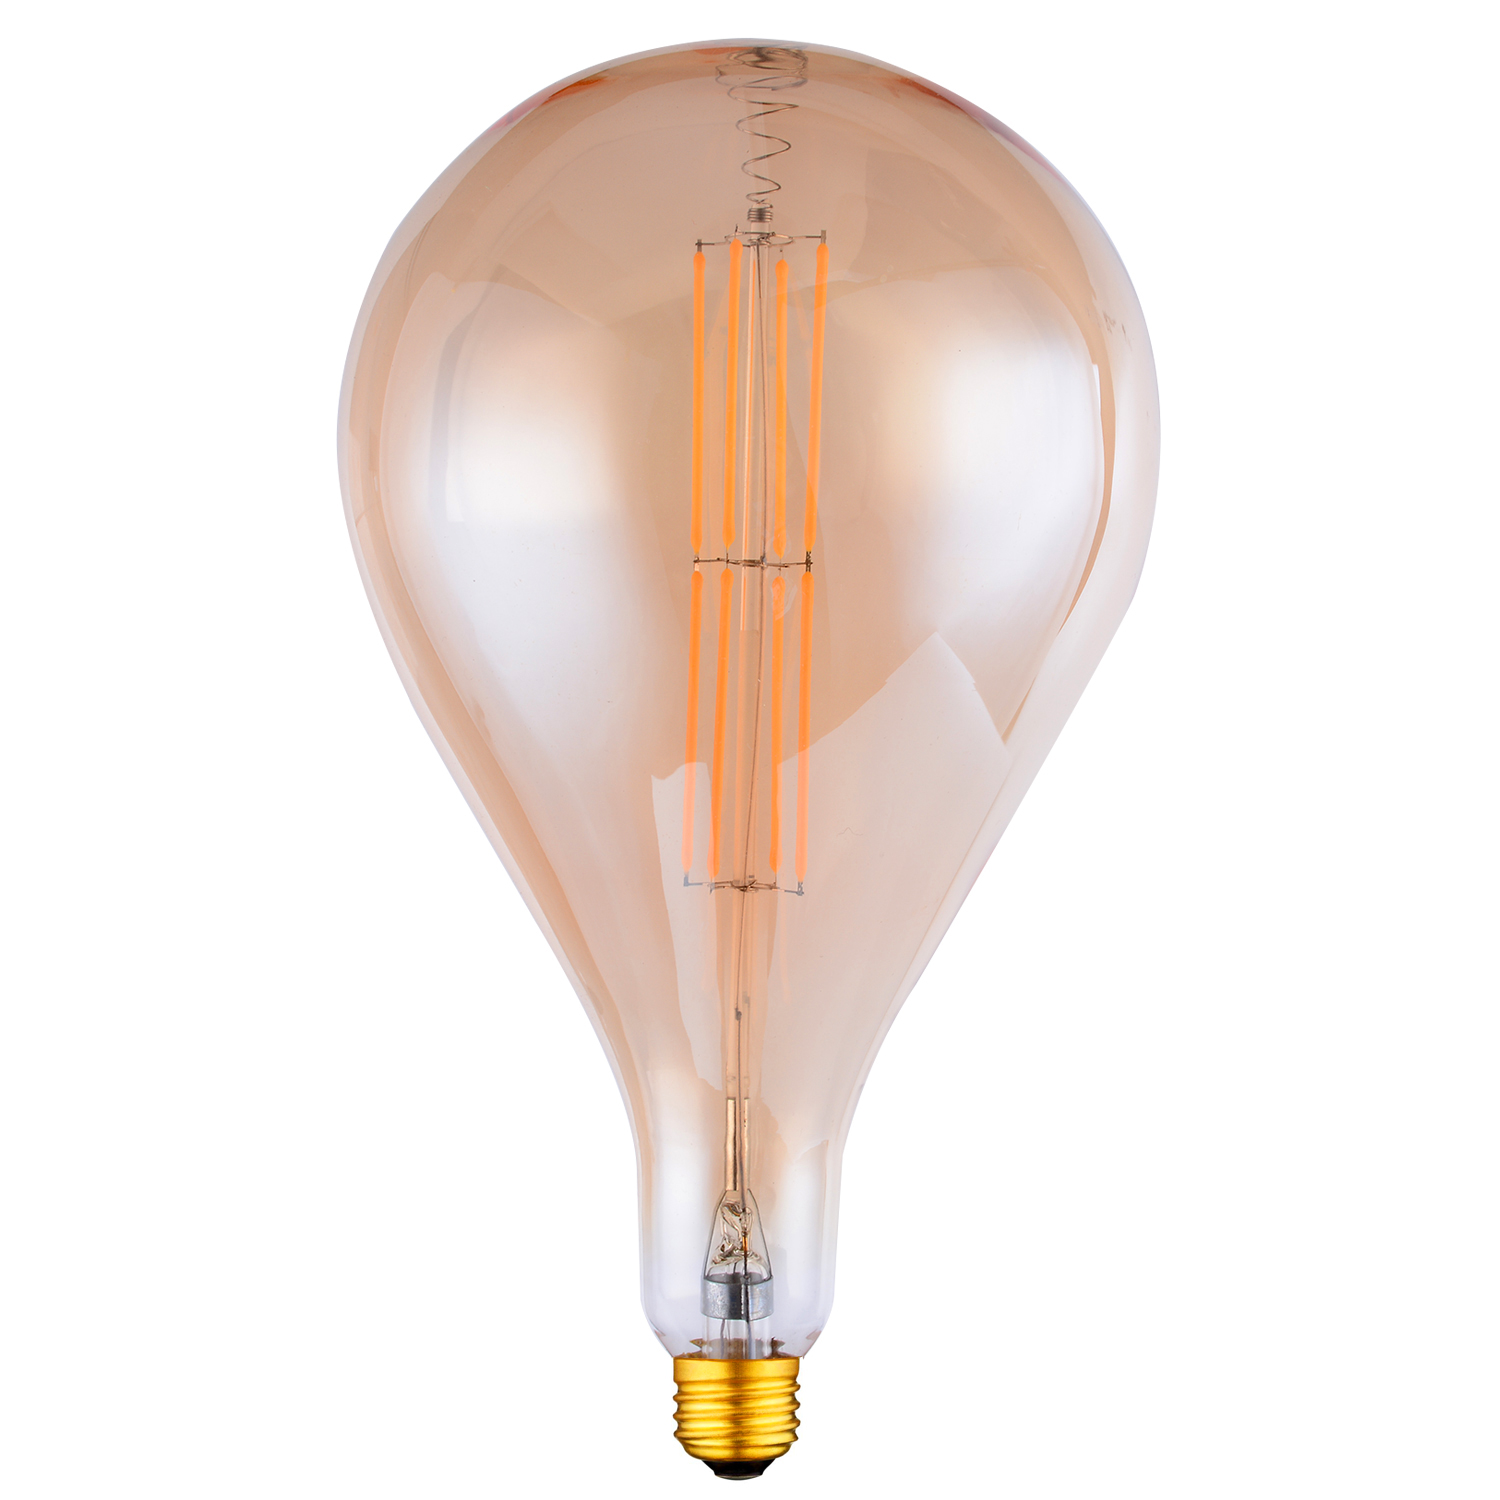 A180 Big LED decoration Filament Oversized bulbs